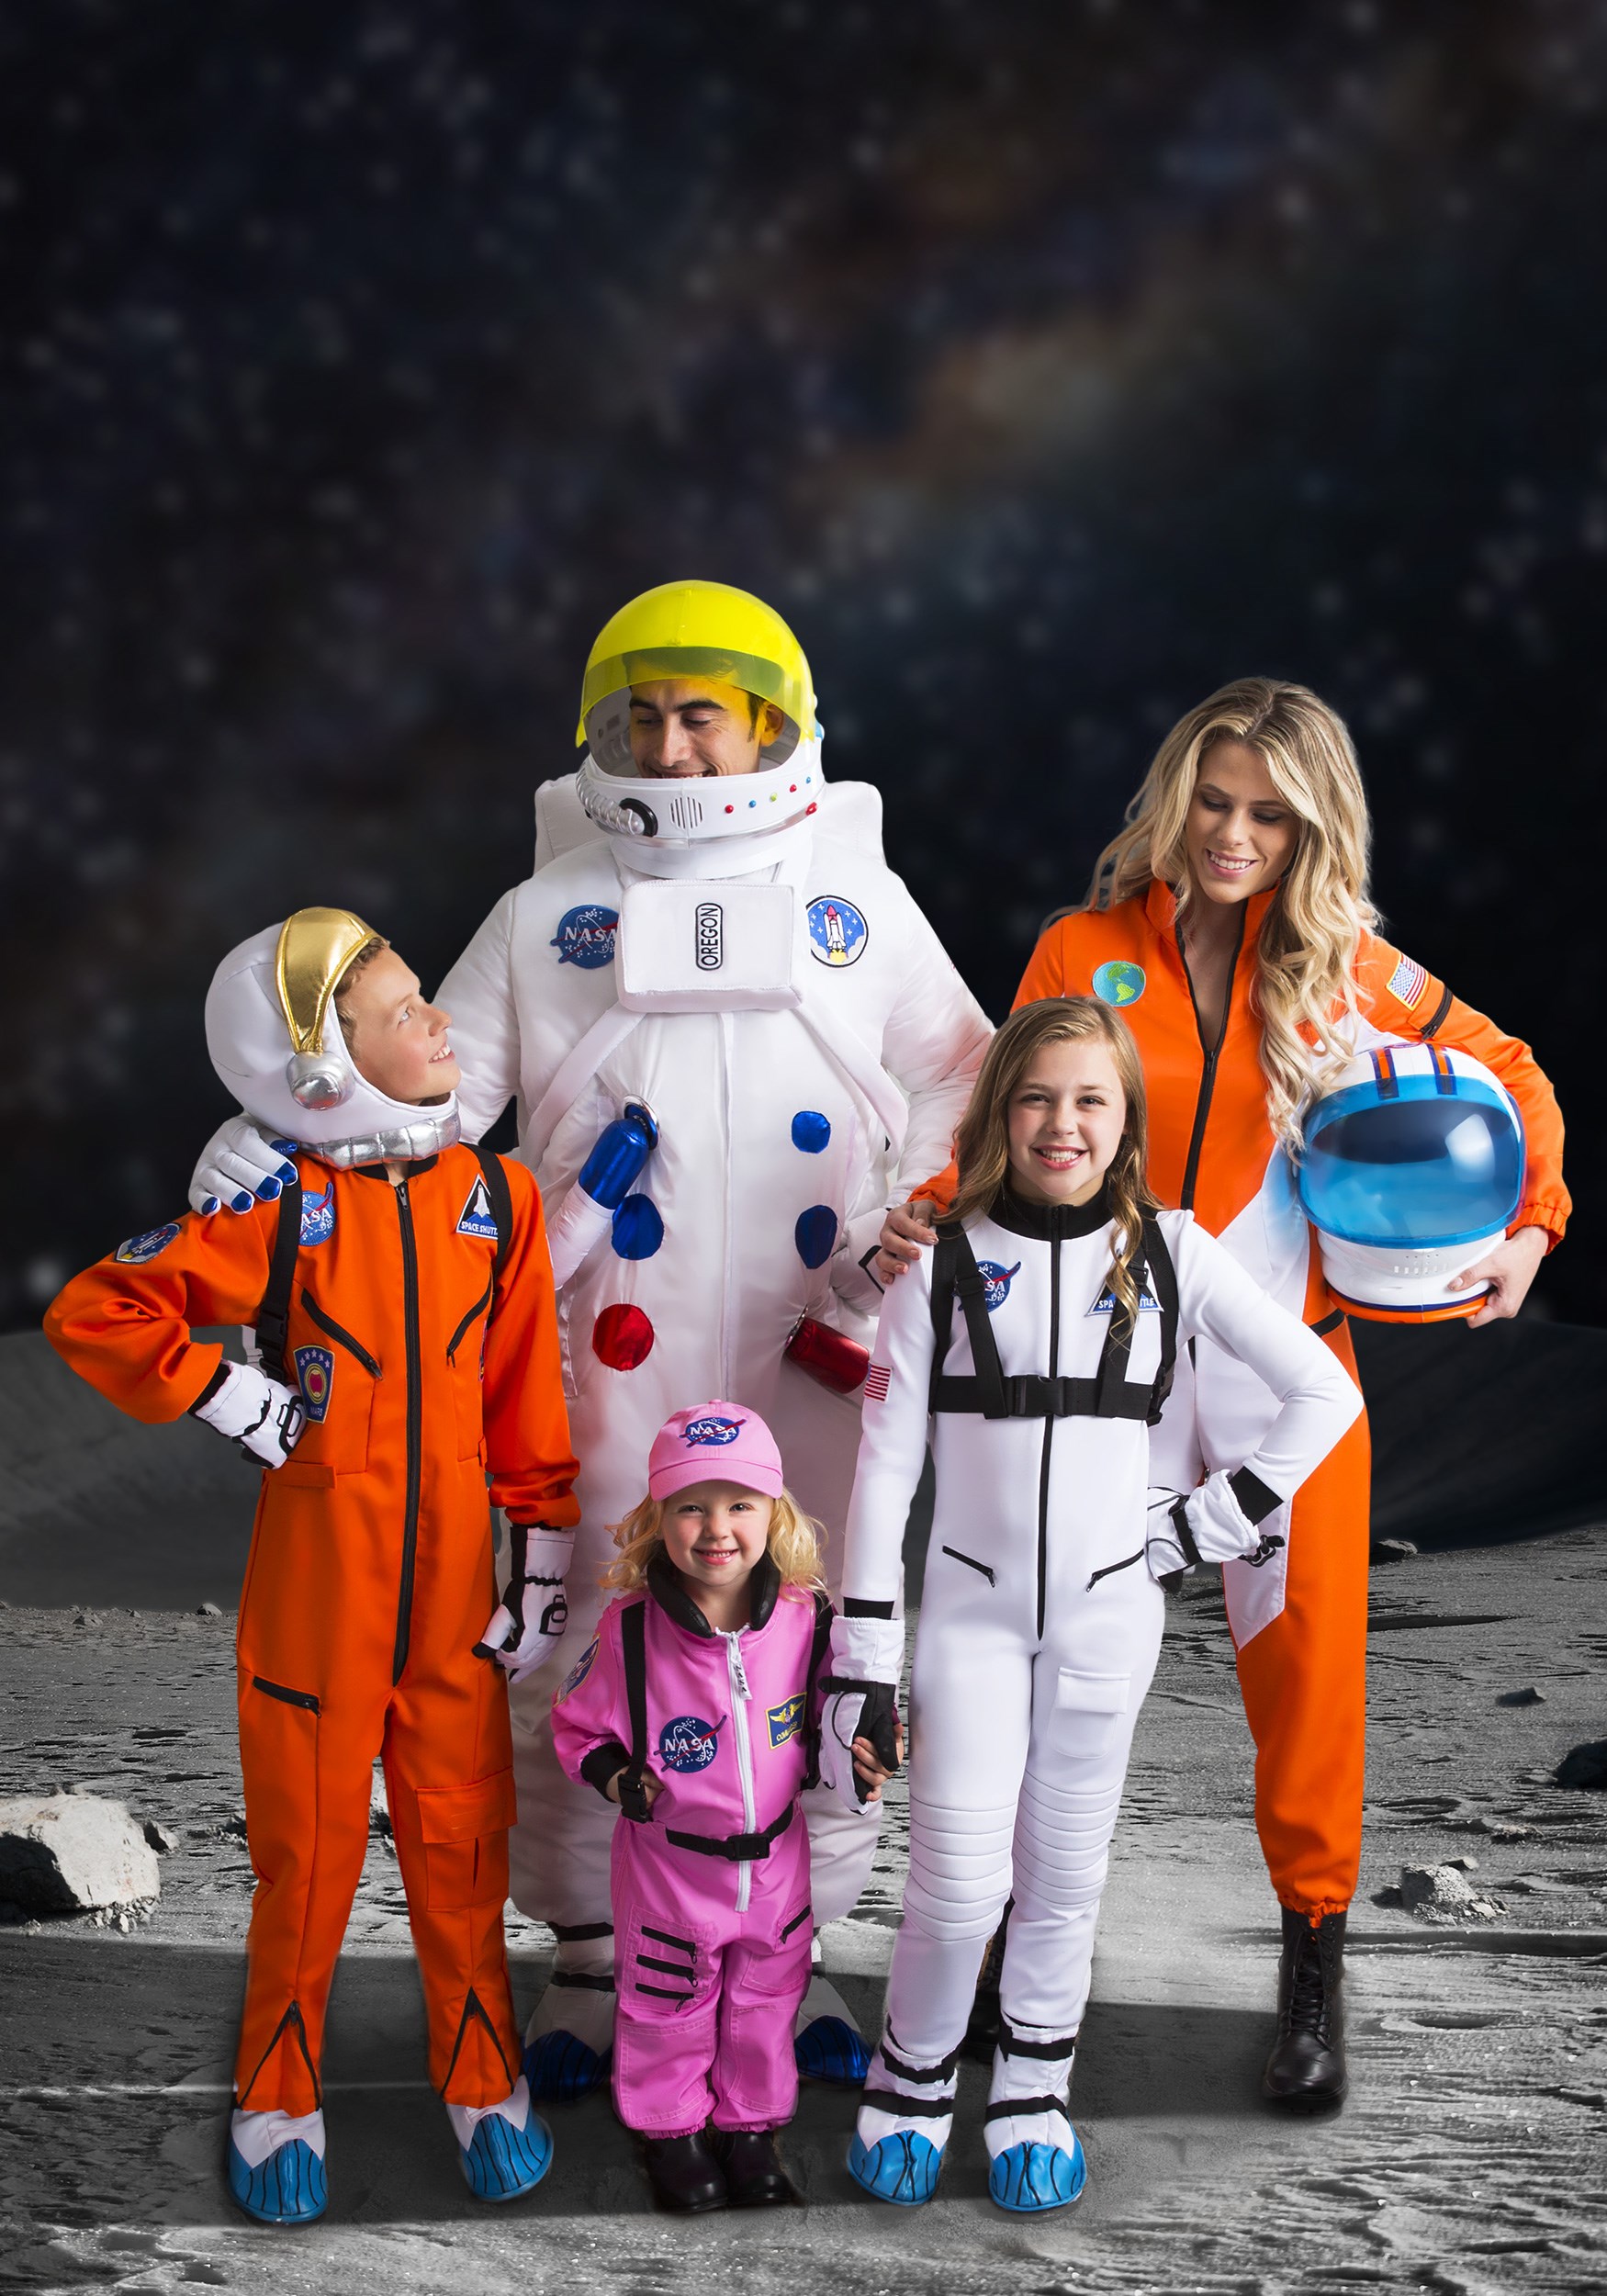 Astronaut Jumpsuit Costume for Women's